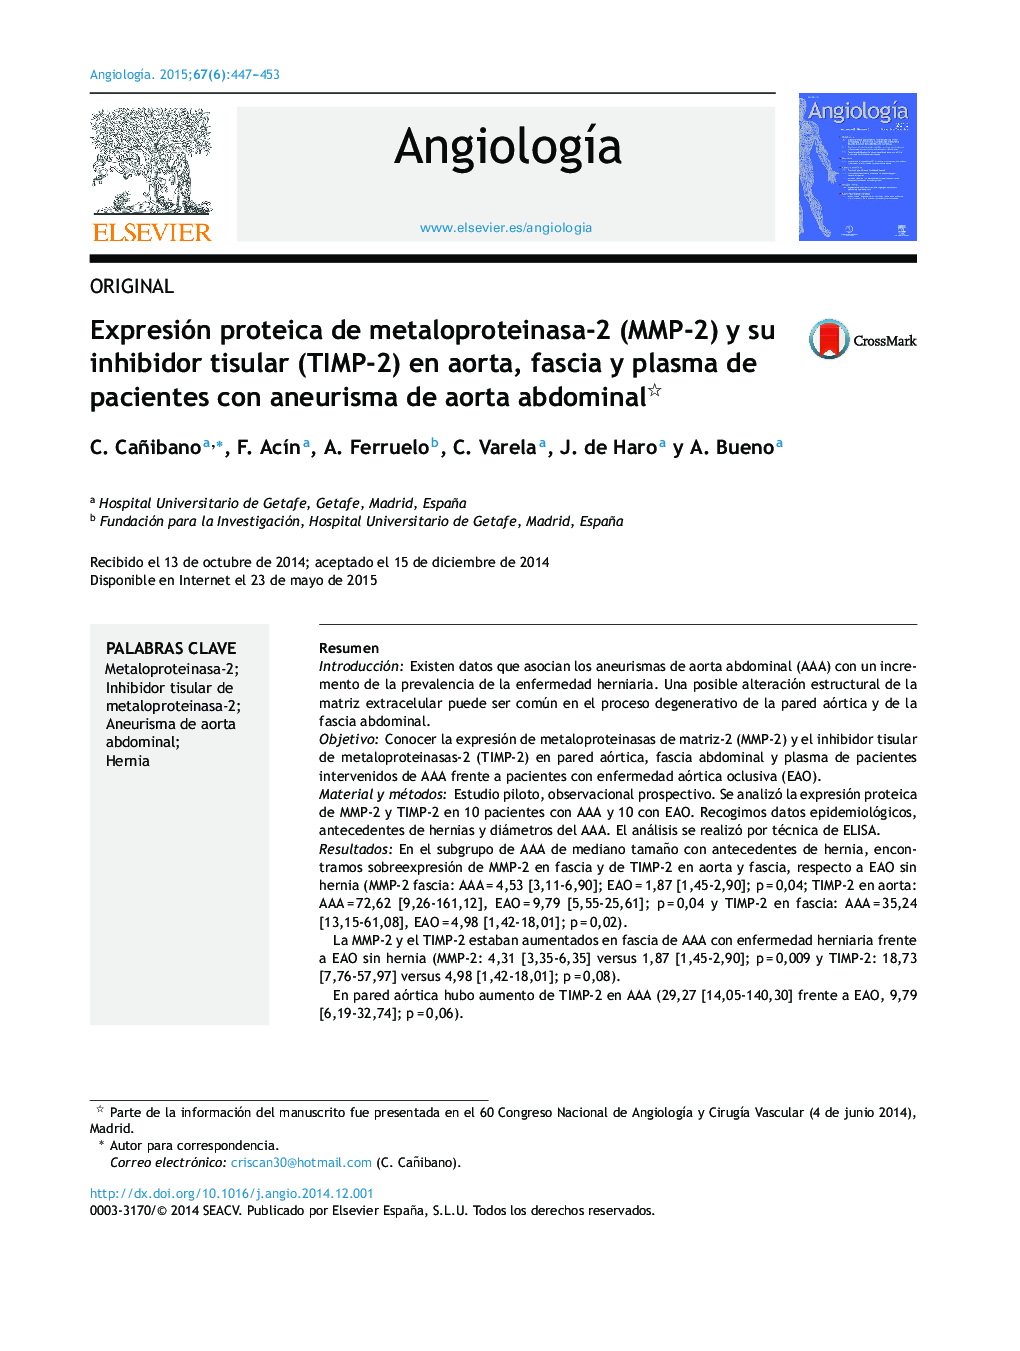 Expresión proteica de metaloproteinasa-2 (MMP-2) y su inhibidor tisular (TIMP-2) en aorta, fascia y plasma de pacientes con aneurisma de aorta abdominal 